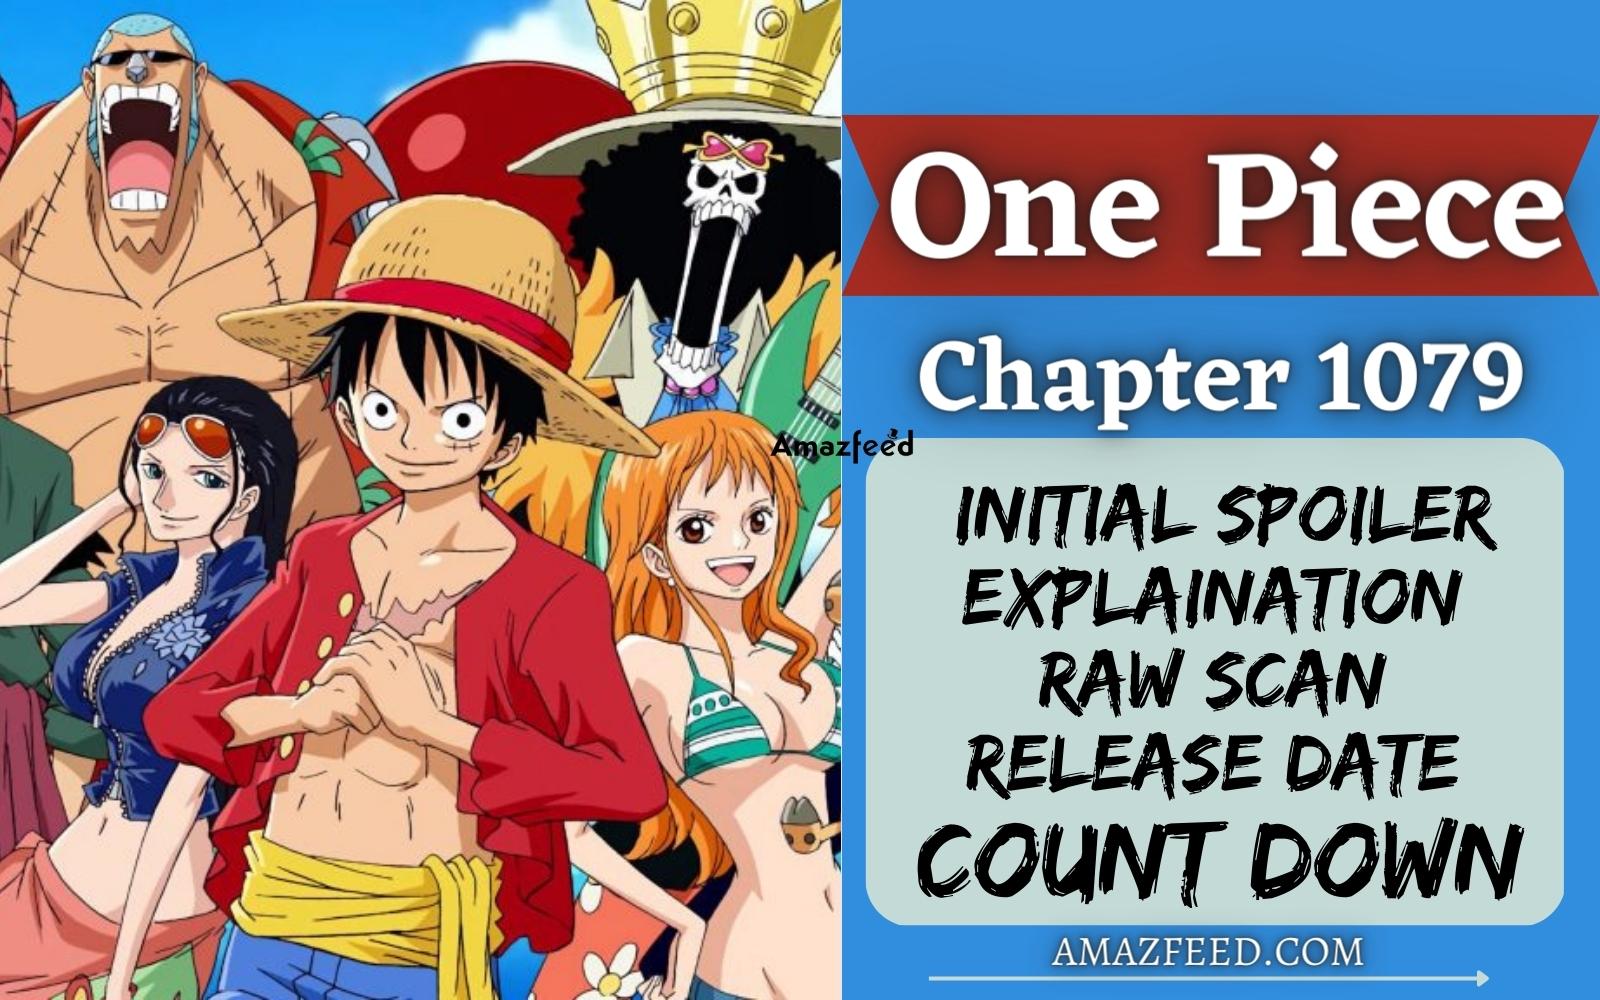 Chapter - One Piece Chapter 1079 Spoiler Pics & Summaries